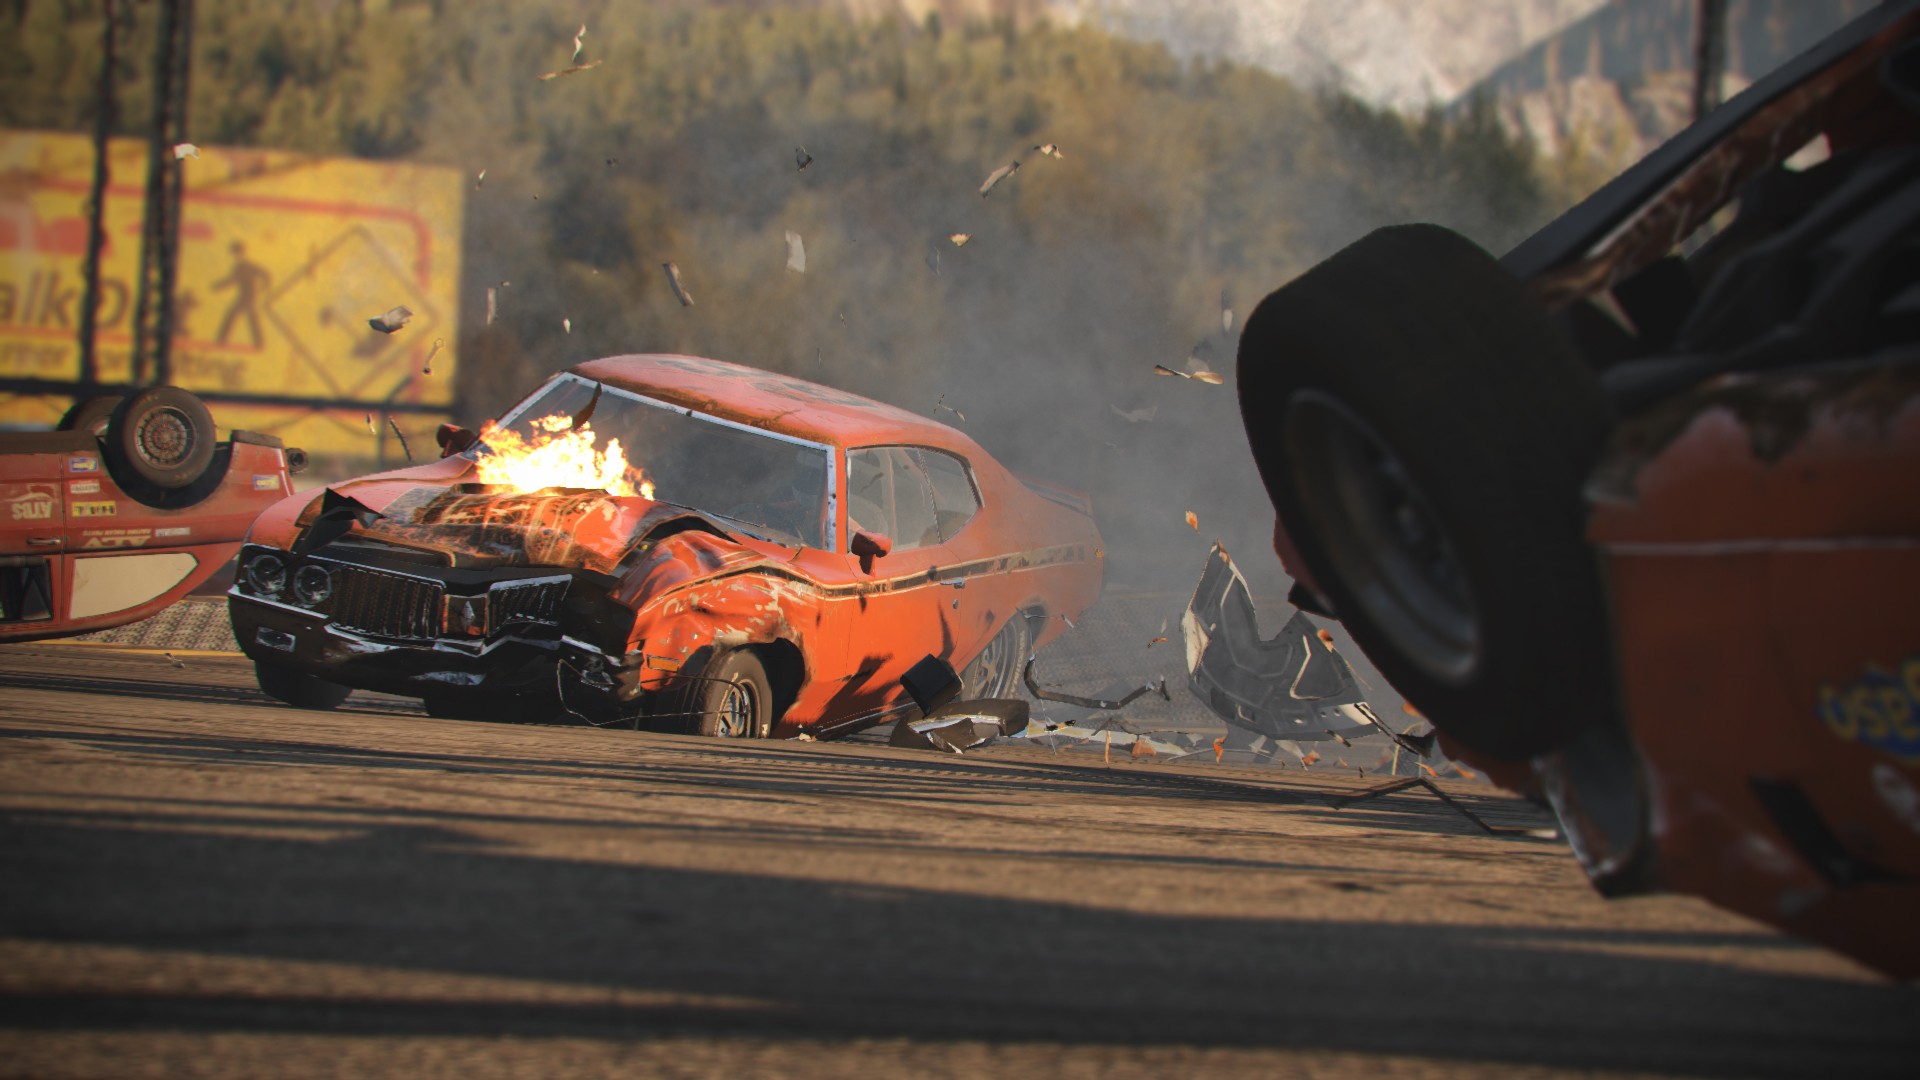 Destruction-Racer-Next-Car-Game-Is-Now-Called-Wreckfest-461054-2.jpg